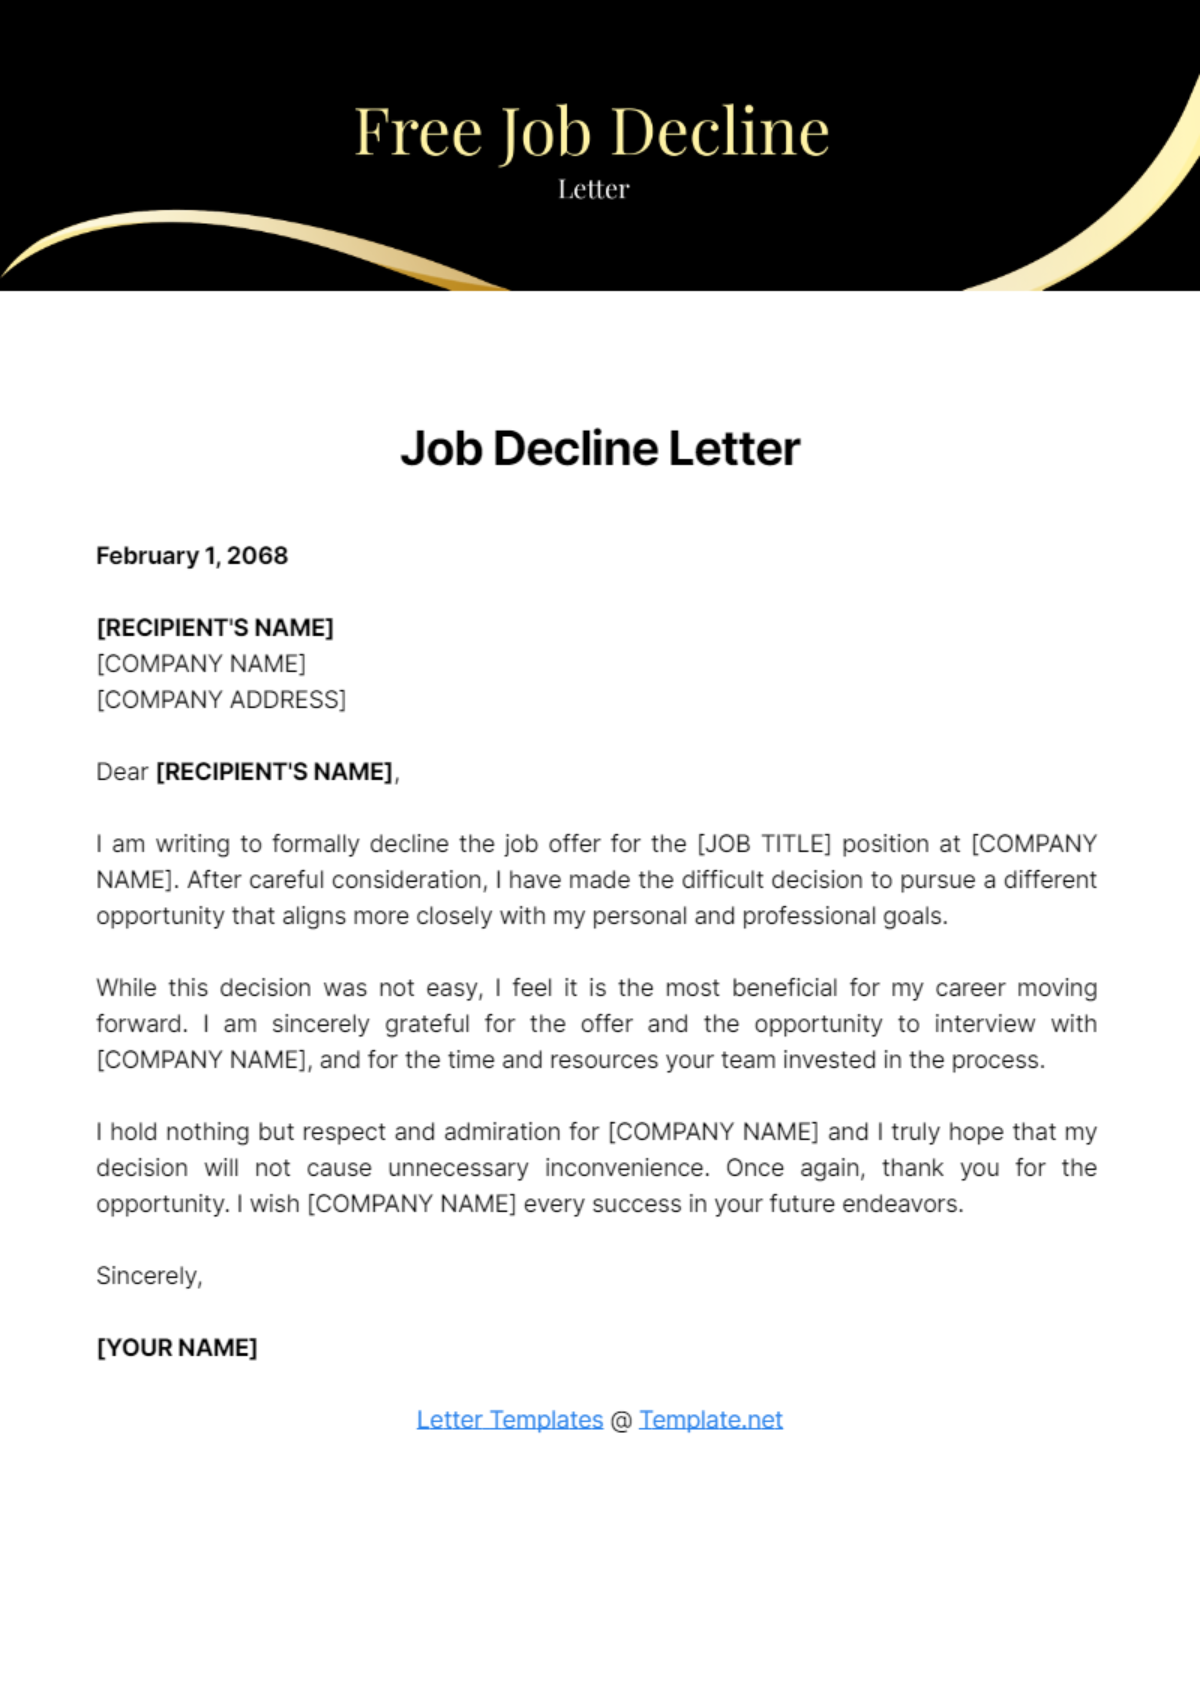 Job Decline Letter Template